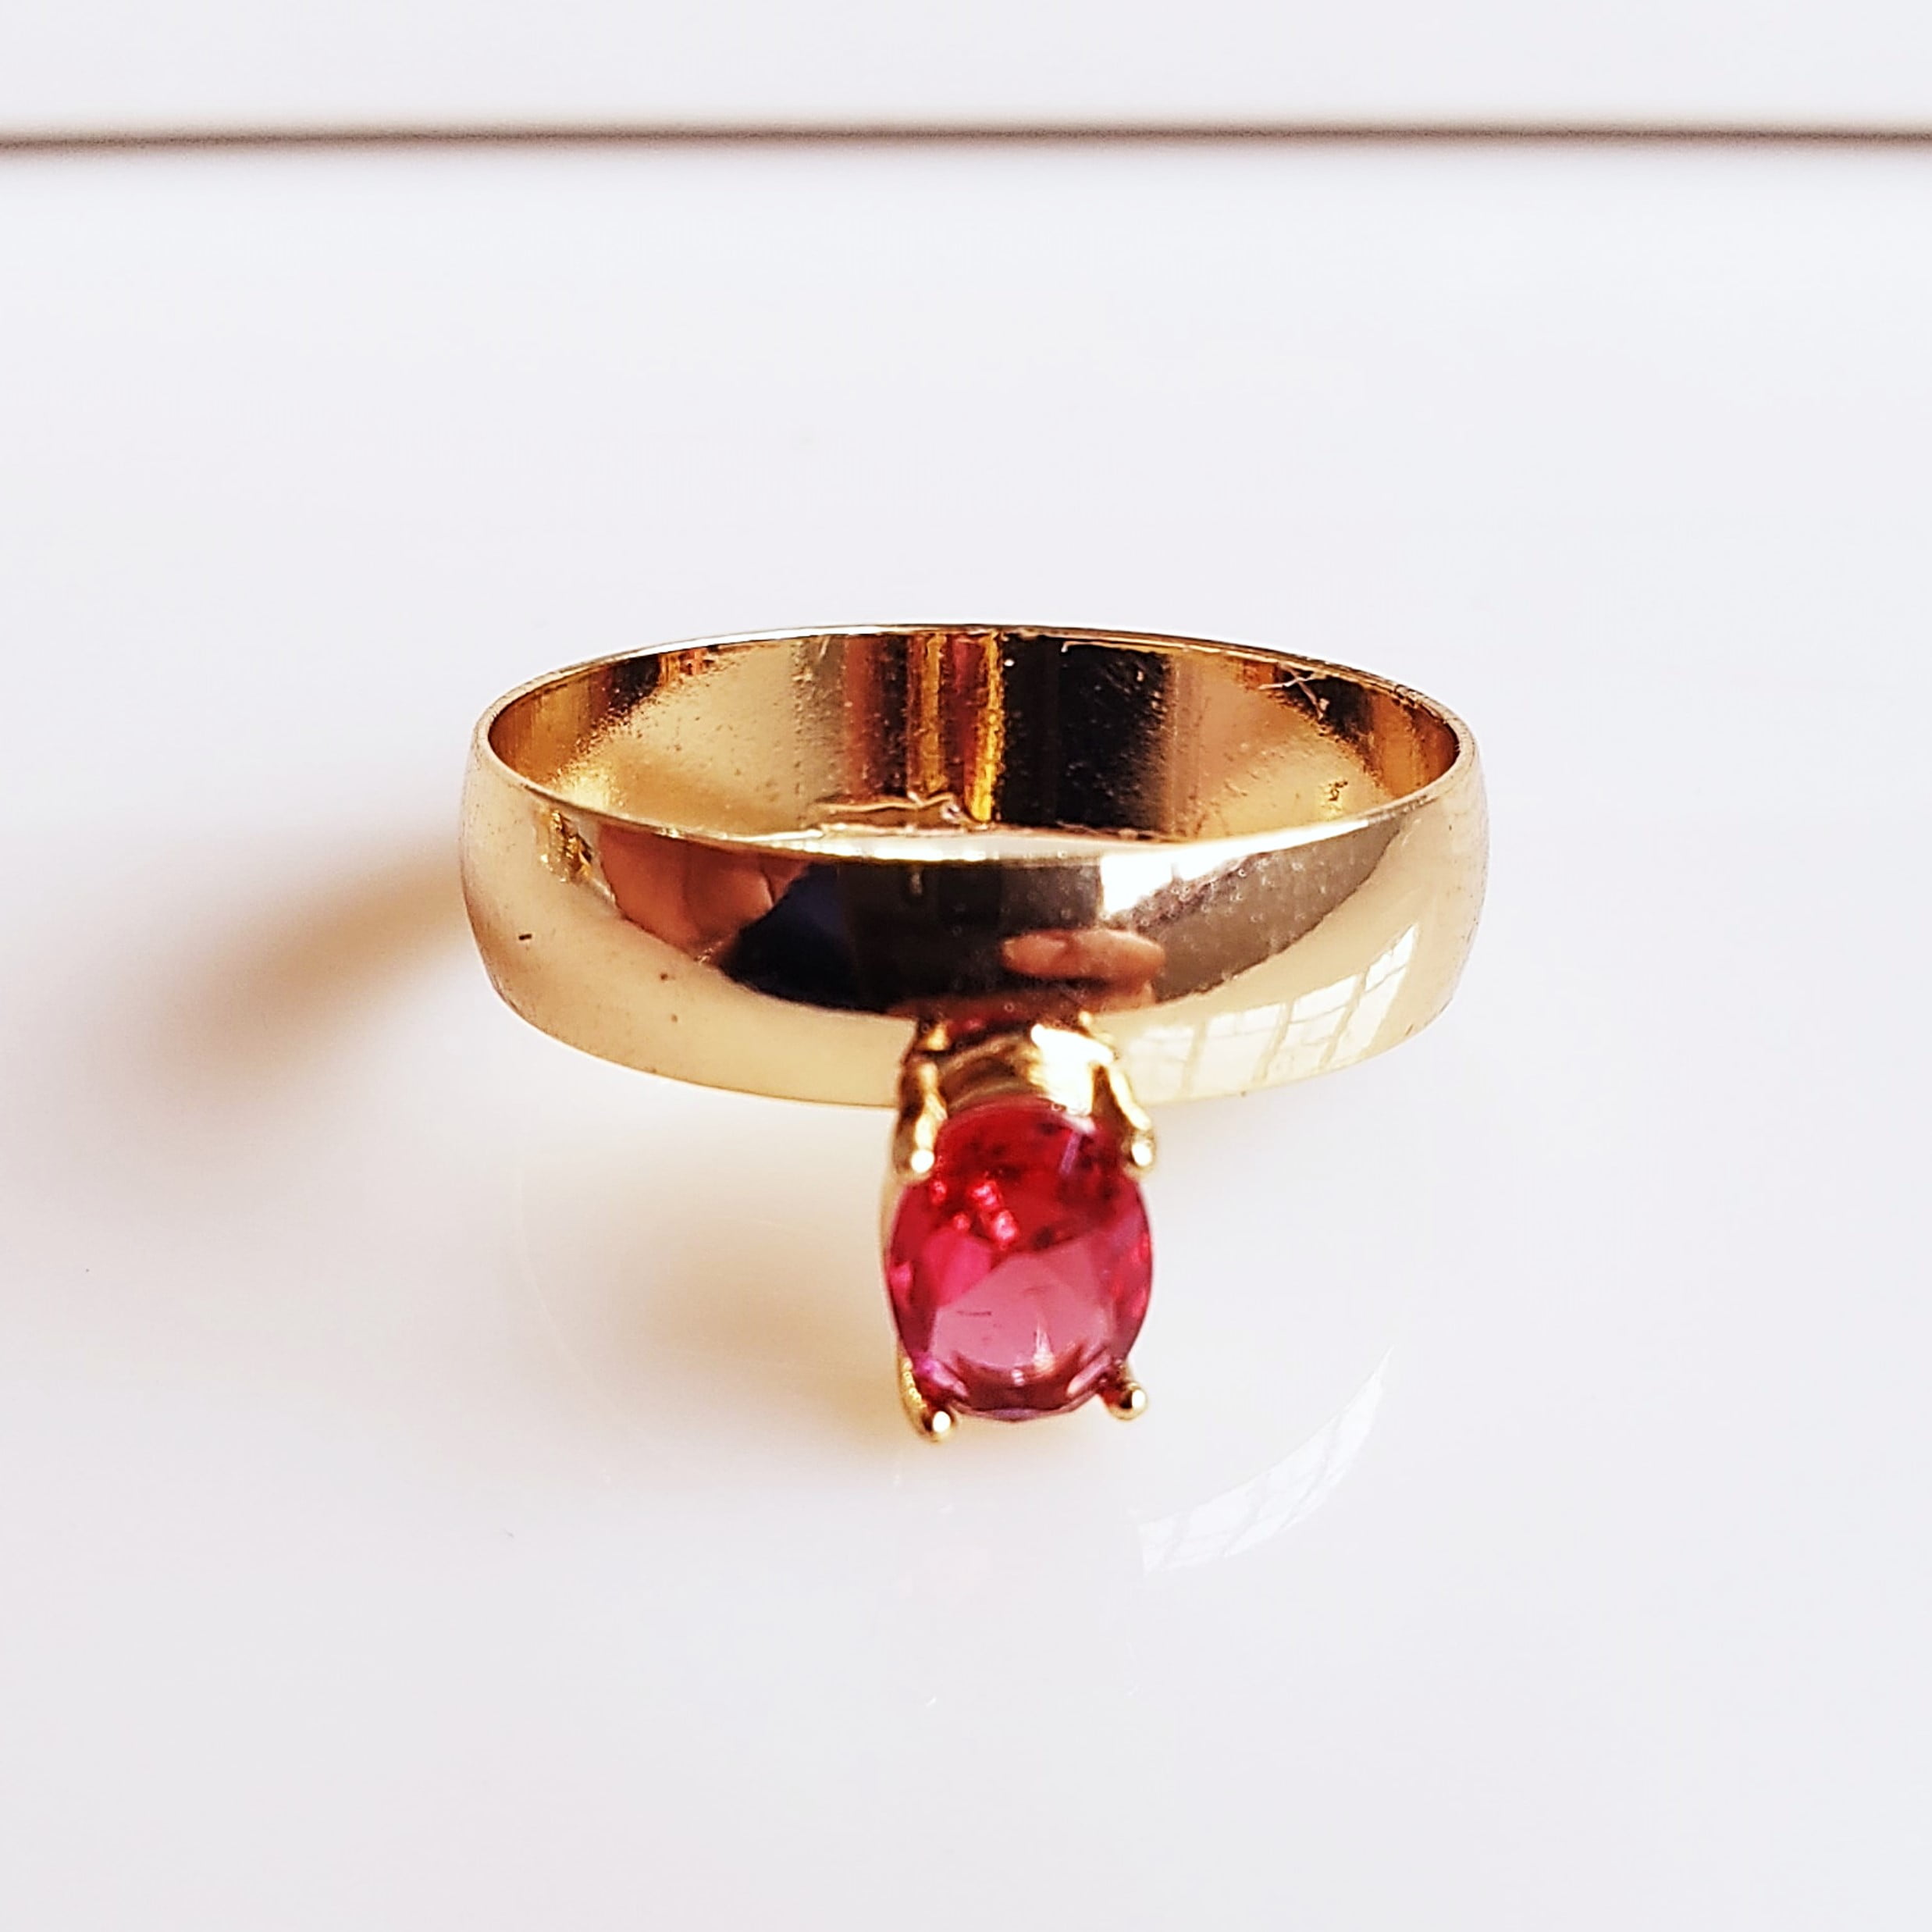 Anel de cristal rosa turmalina - modelo Princess4 - banhado a ouro       